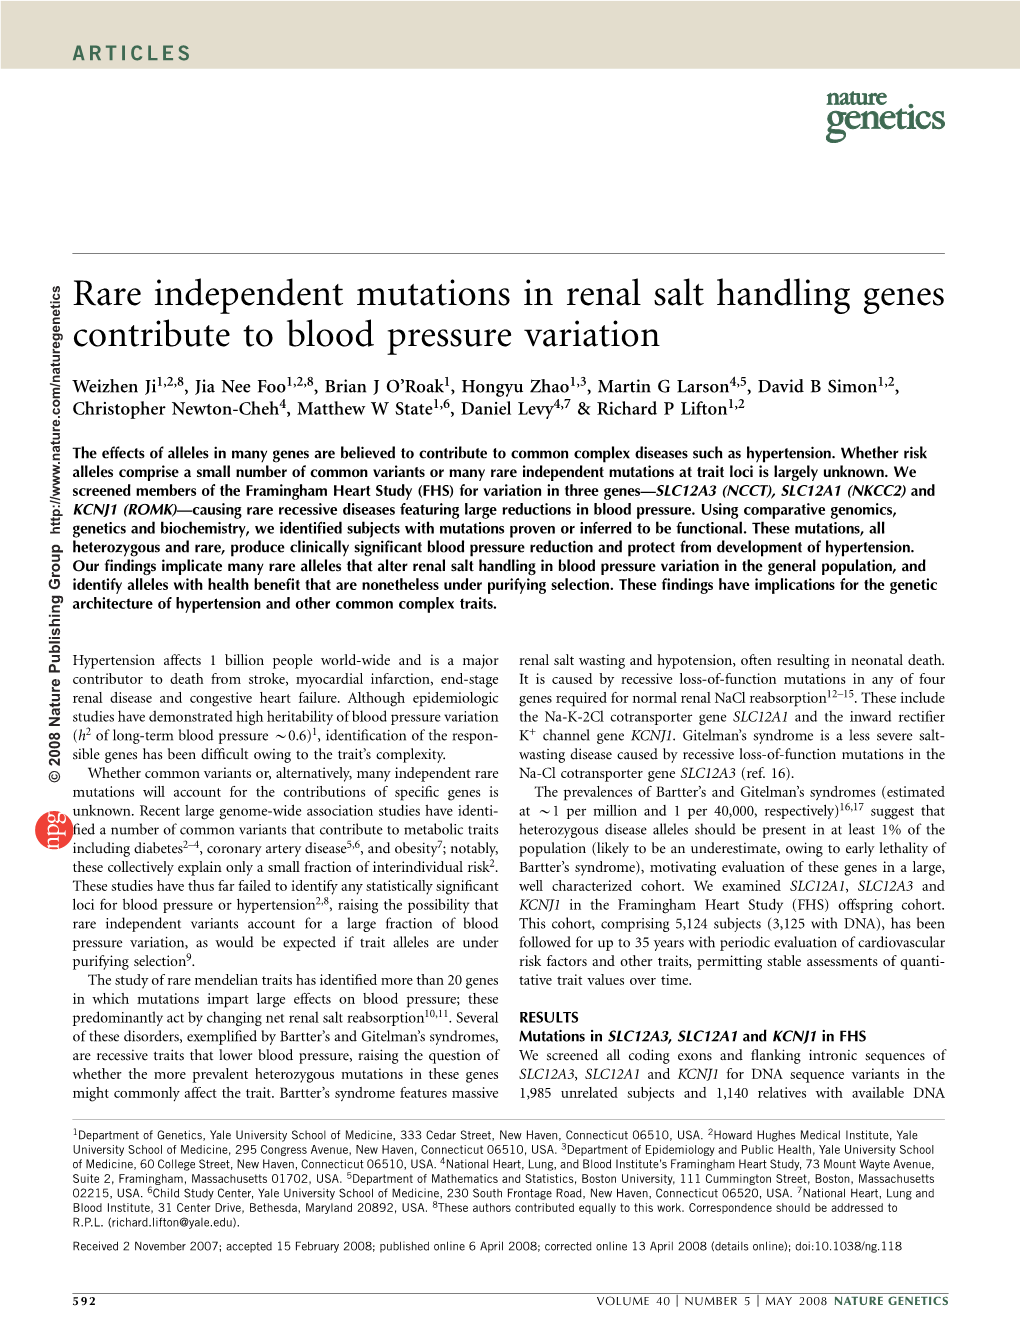 Rare Independent Mutations in Renal Salt Handling Genes Contribute to Blood Pressure Variation